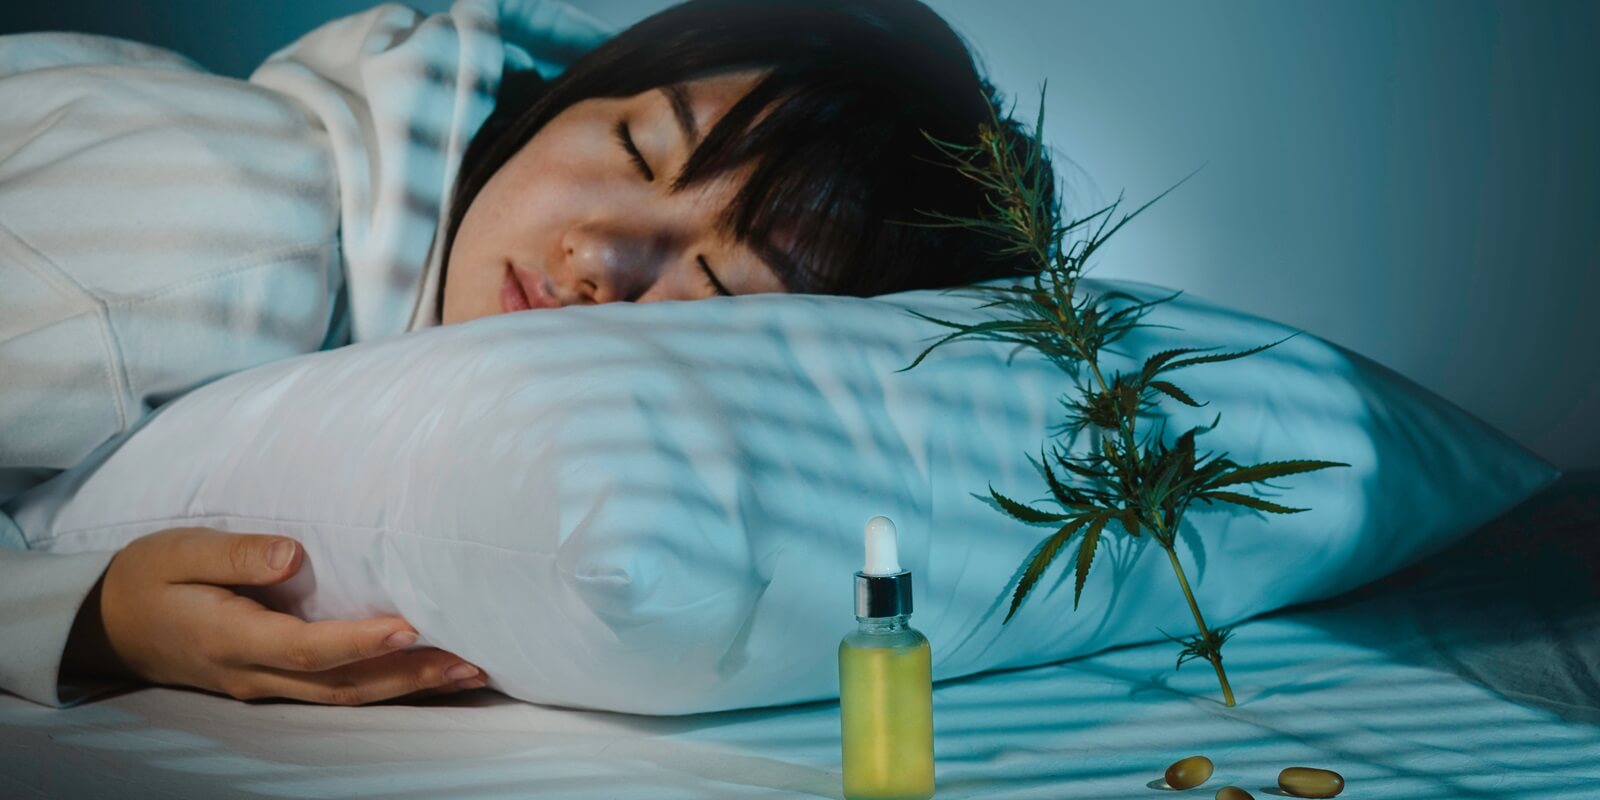 Boston, MA asian girl sleeping in evening bedroom with cbd oil